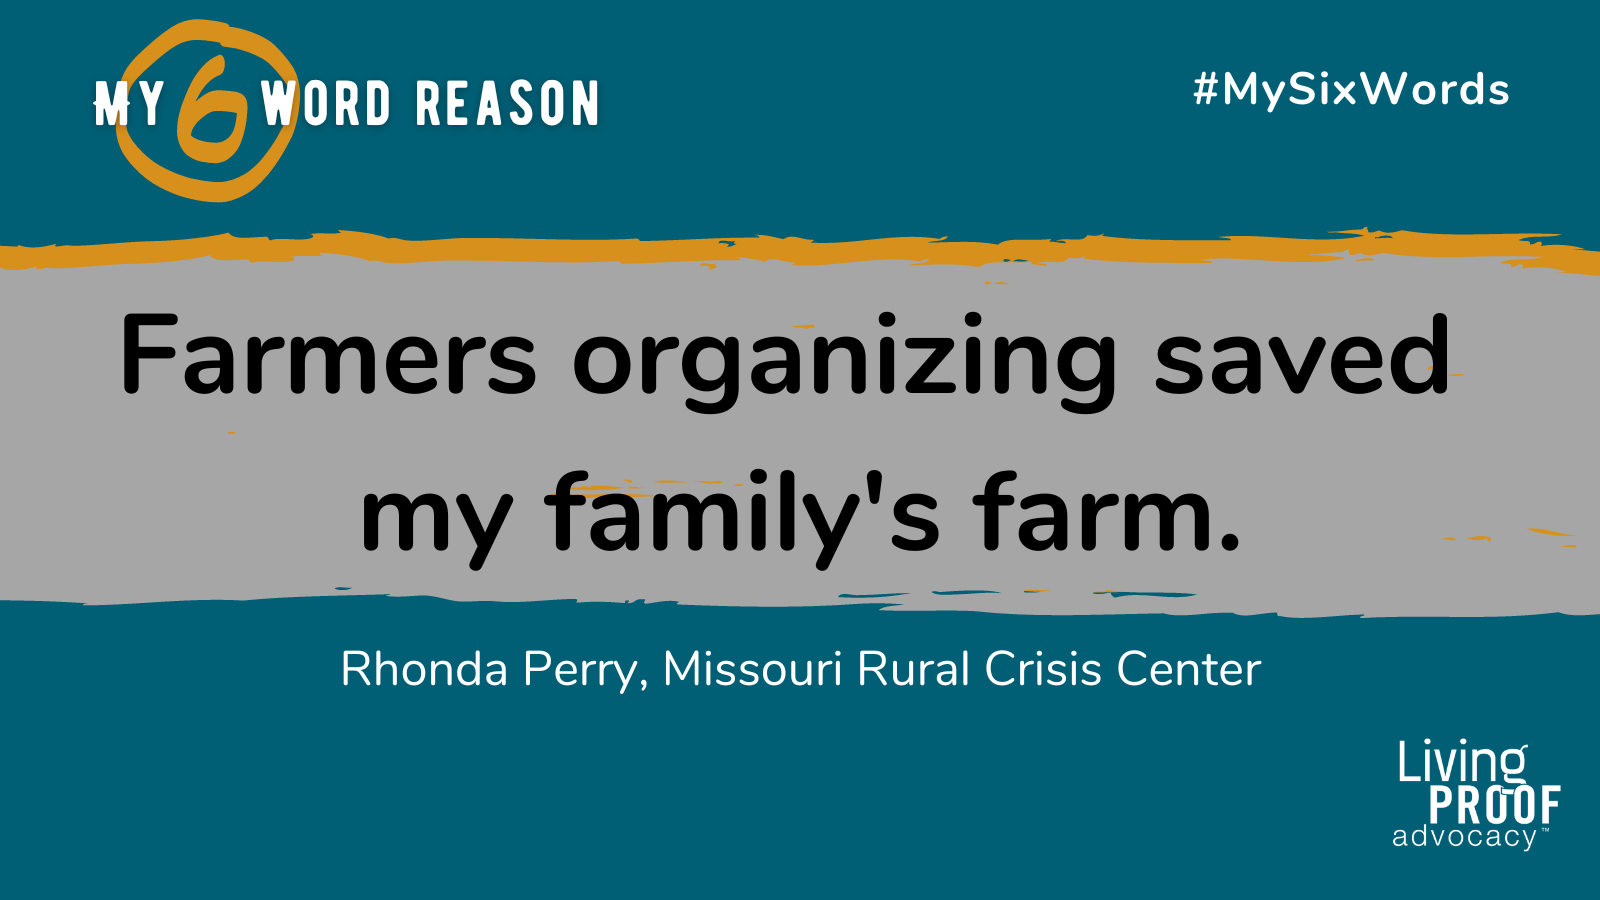 Farmers organizing saved my family's farm. - Rhonda Perry, Missouri Rural Crisis Center